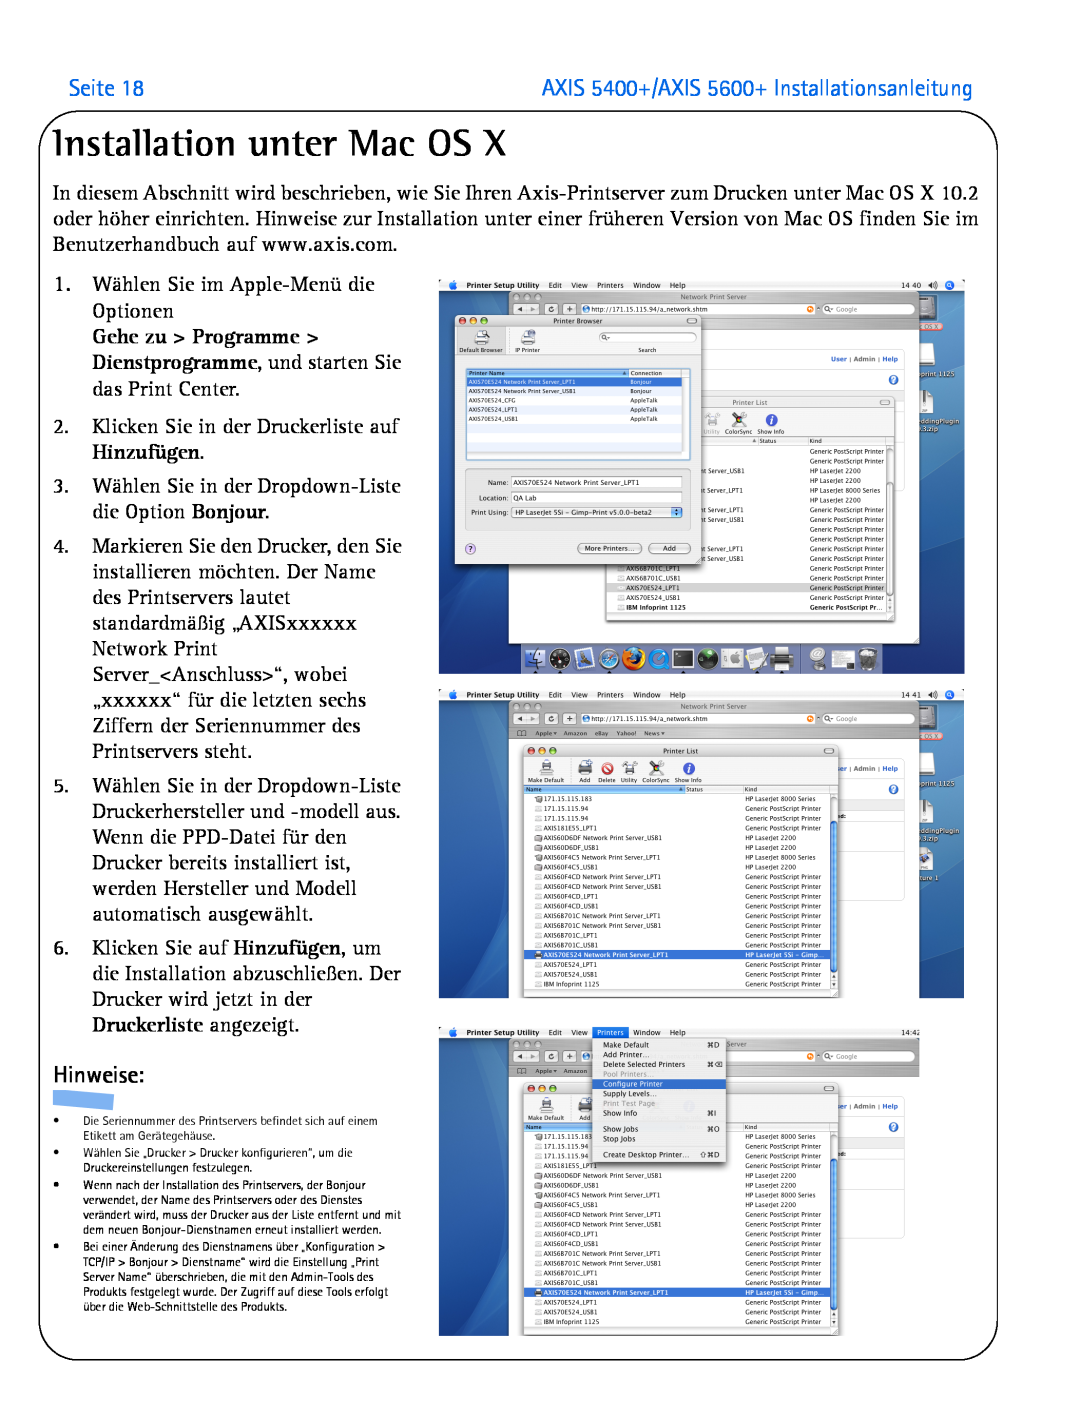 Axis Communications manual Installation unter Mac OS, Seite, Hinweise, AXIS 5400+/AXIS 5600+ Installationsanleitung 